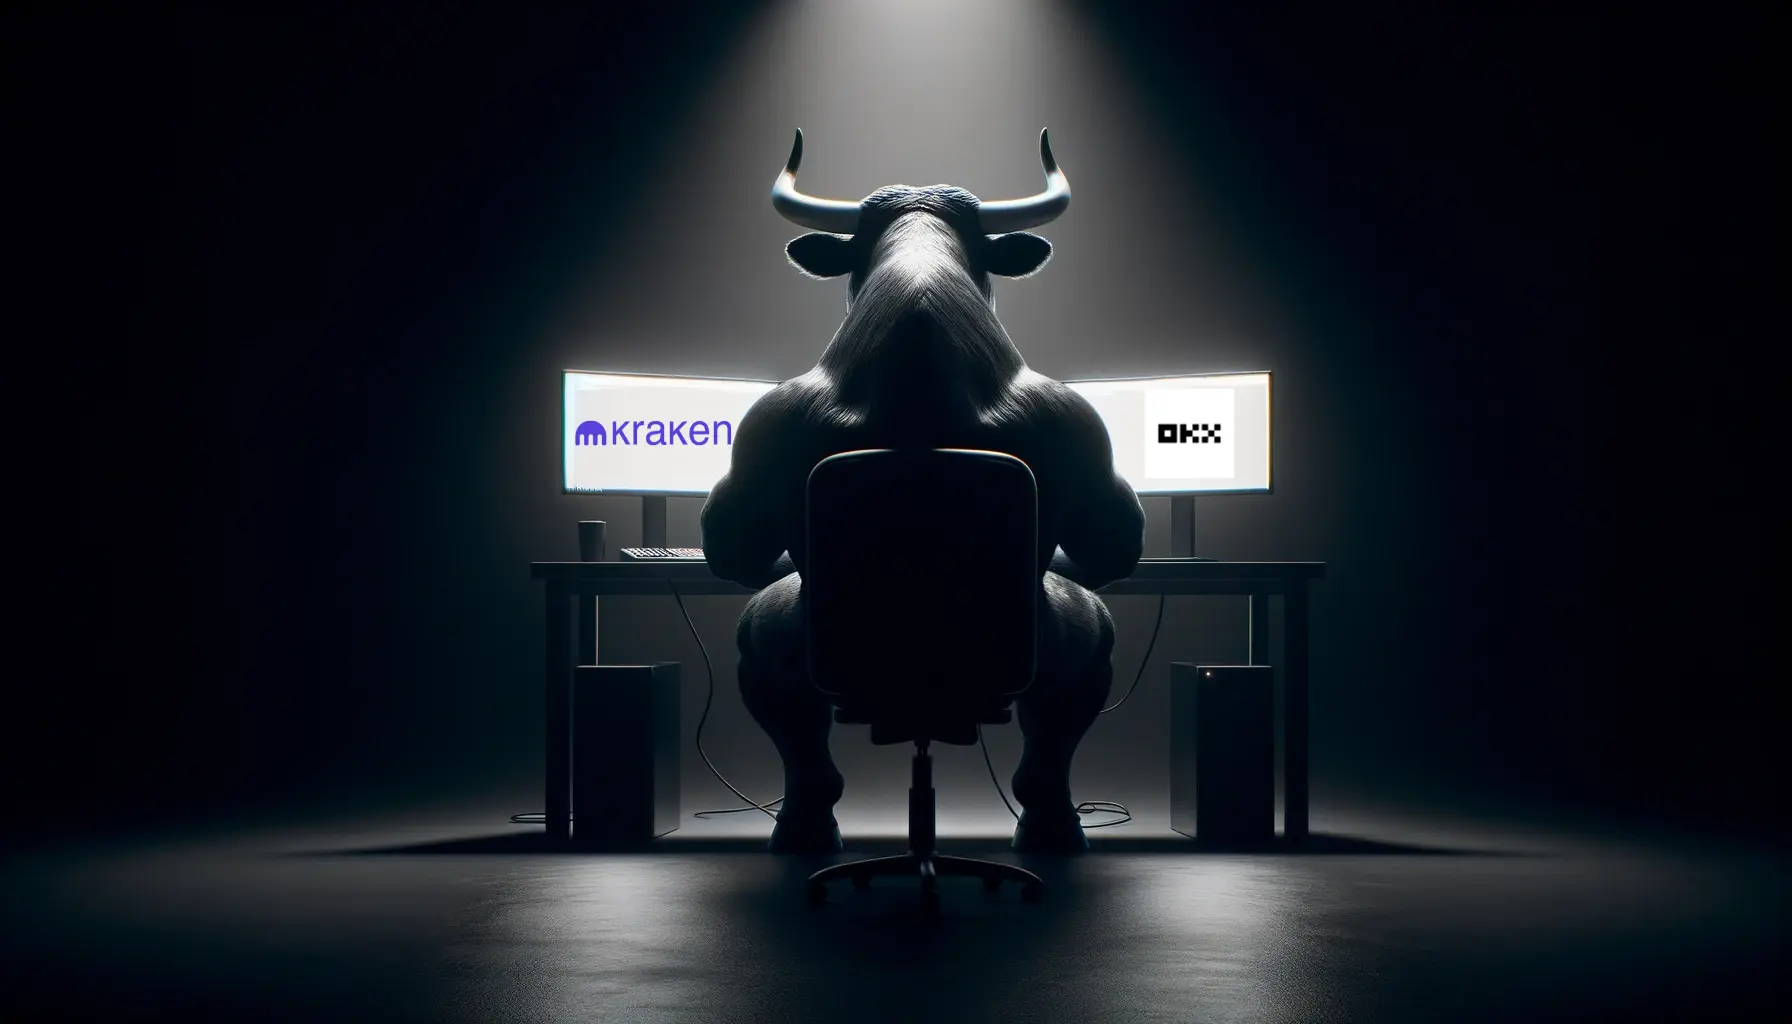 Bull silhouette facing dual monitors with logos, comparing OKX vs Kraken